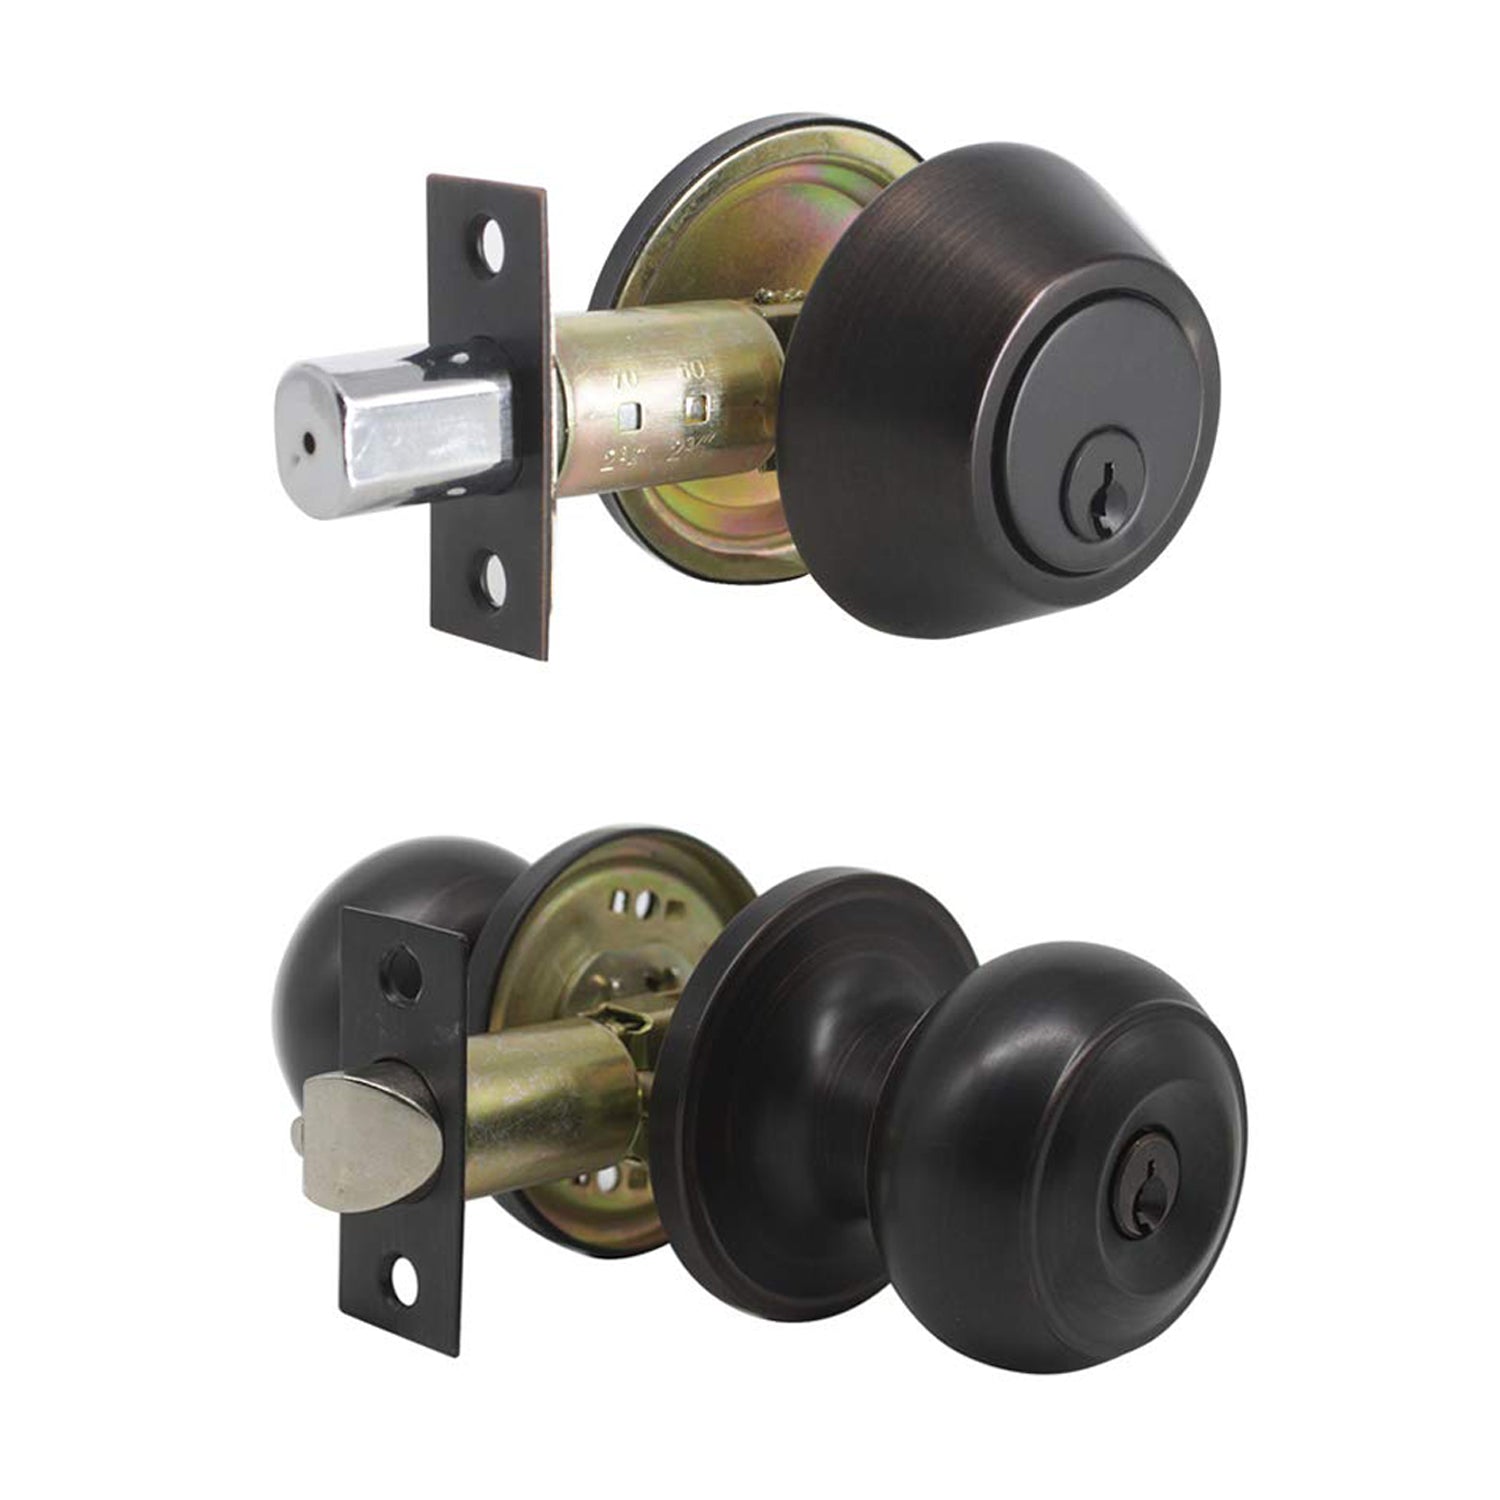 Flat Ball Door Knob Lock with Double Cylinder Deadbolt Keyed Entry